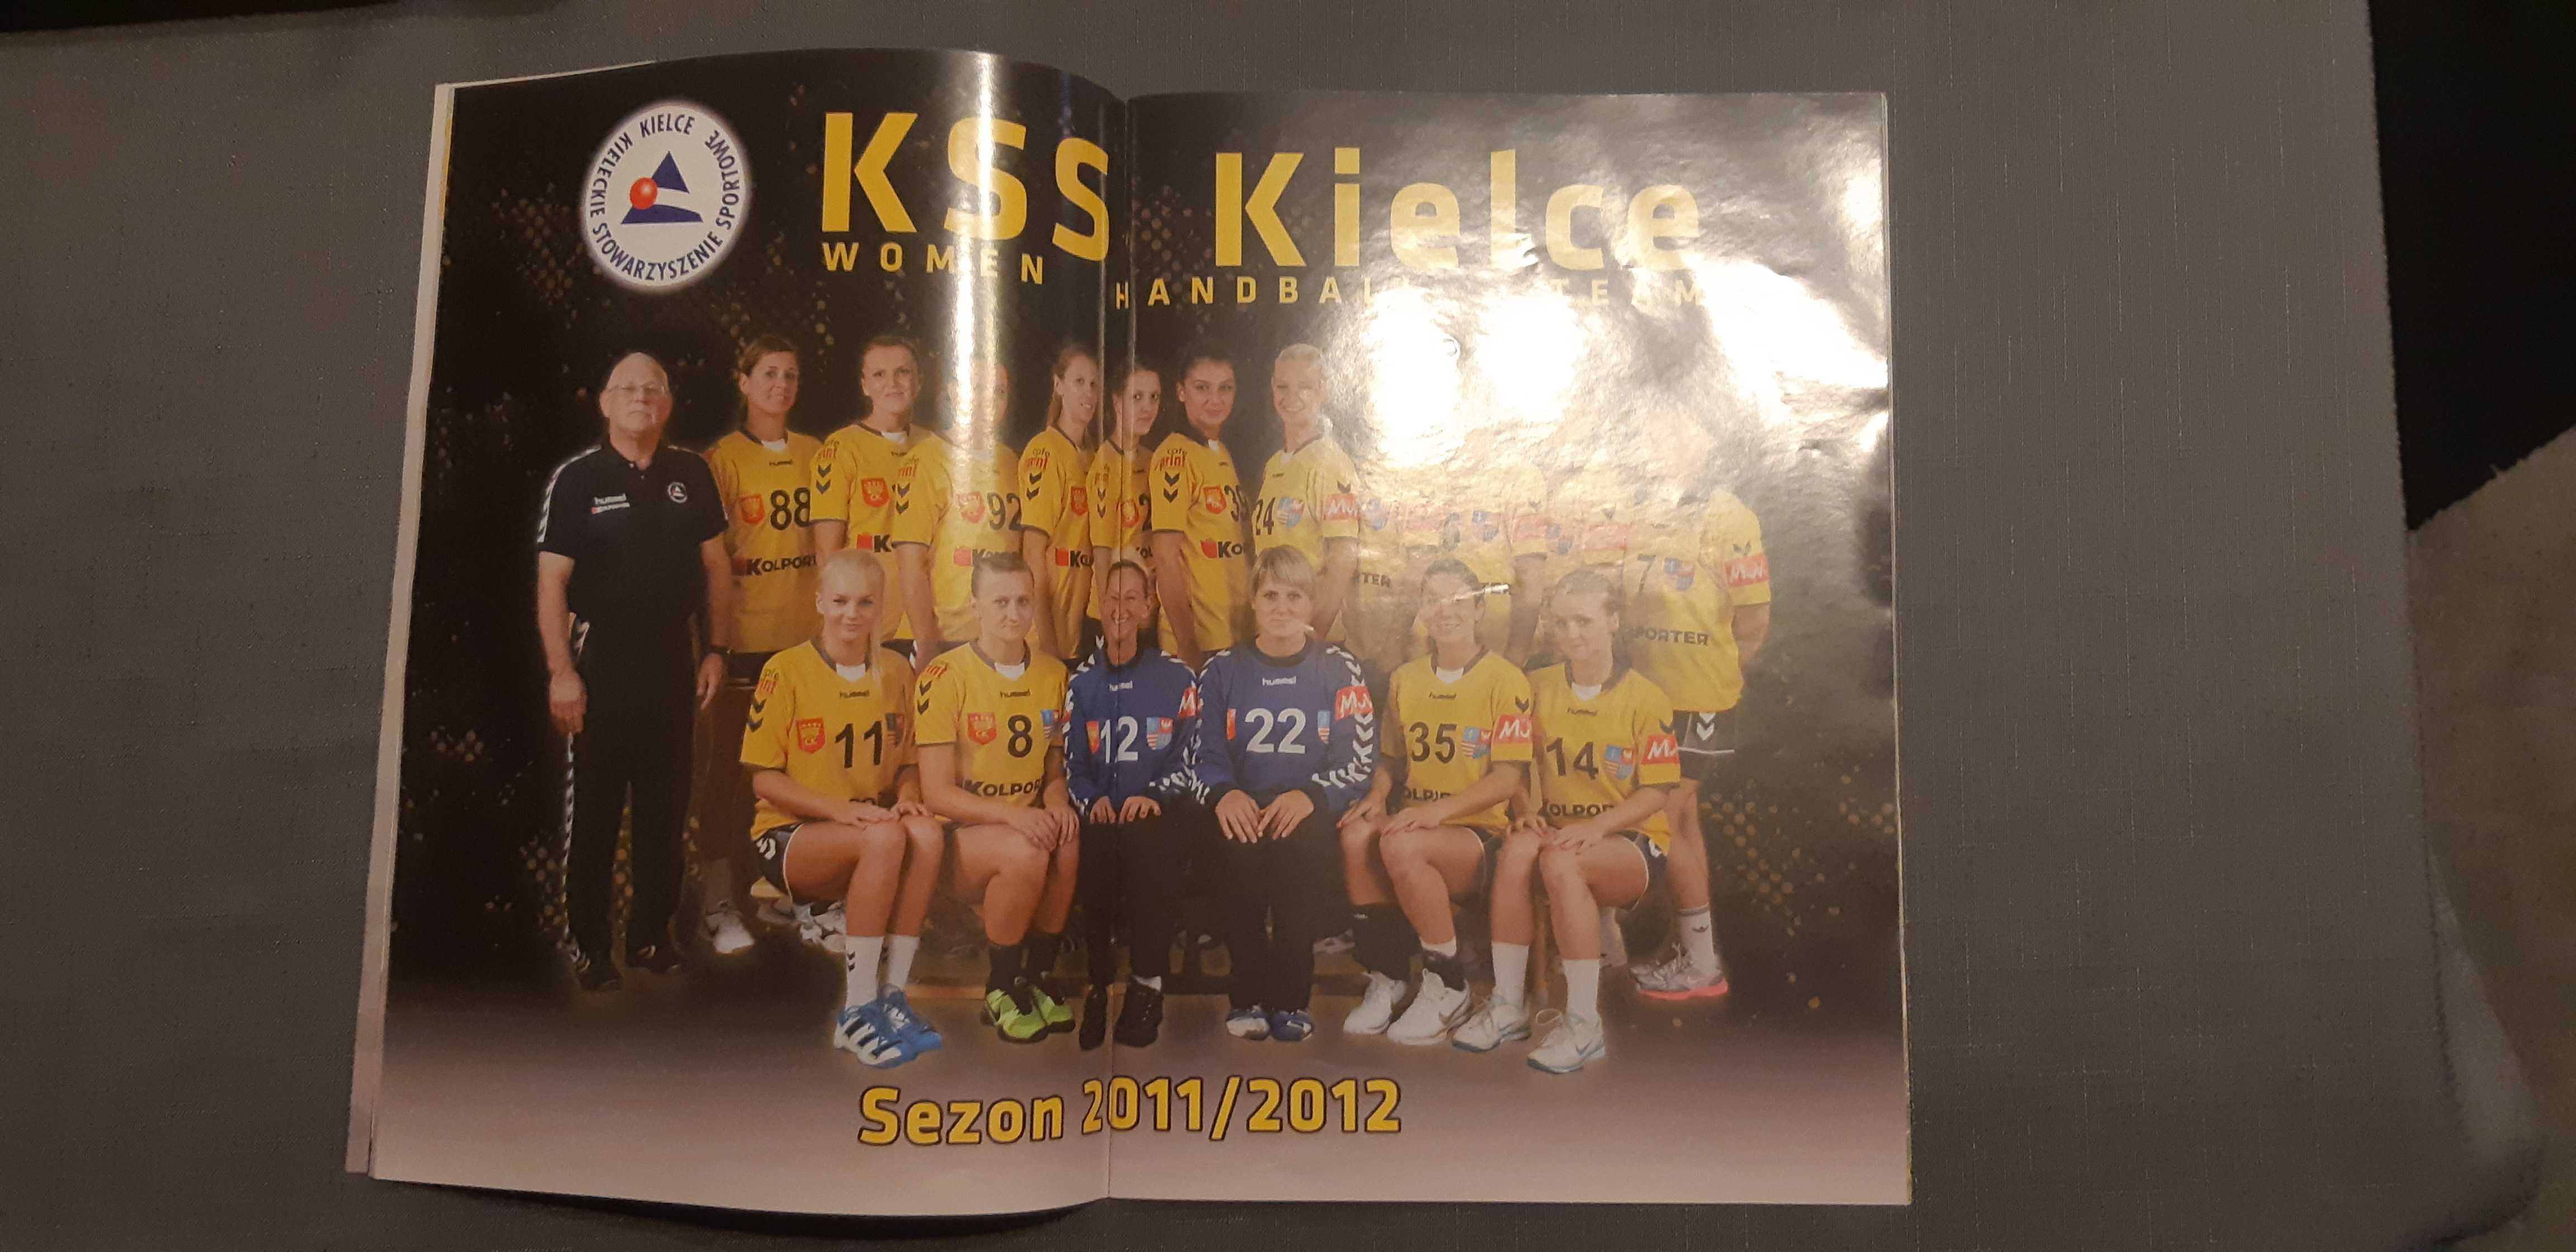 informator KSS Kielce women handball team sezon  2011/2012